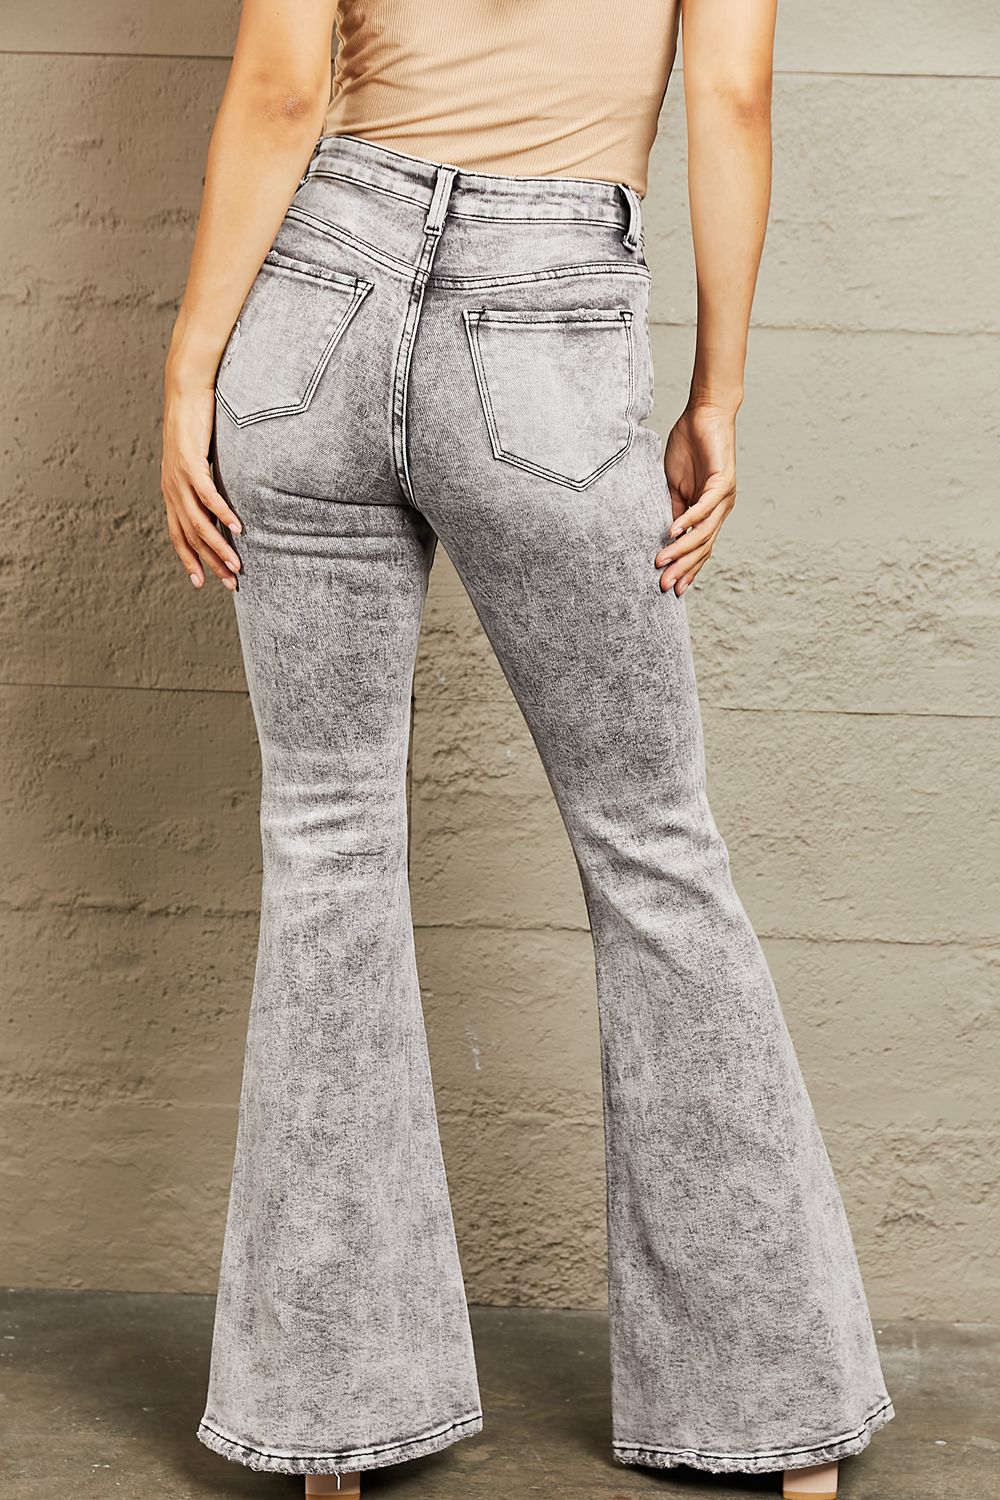 BAYEAS High Waisted Acid Wash Flare Jeans - Alonna's Legging Land